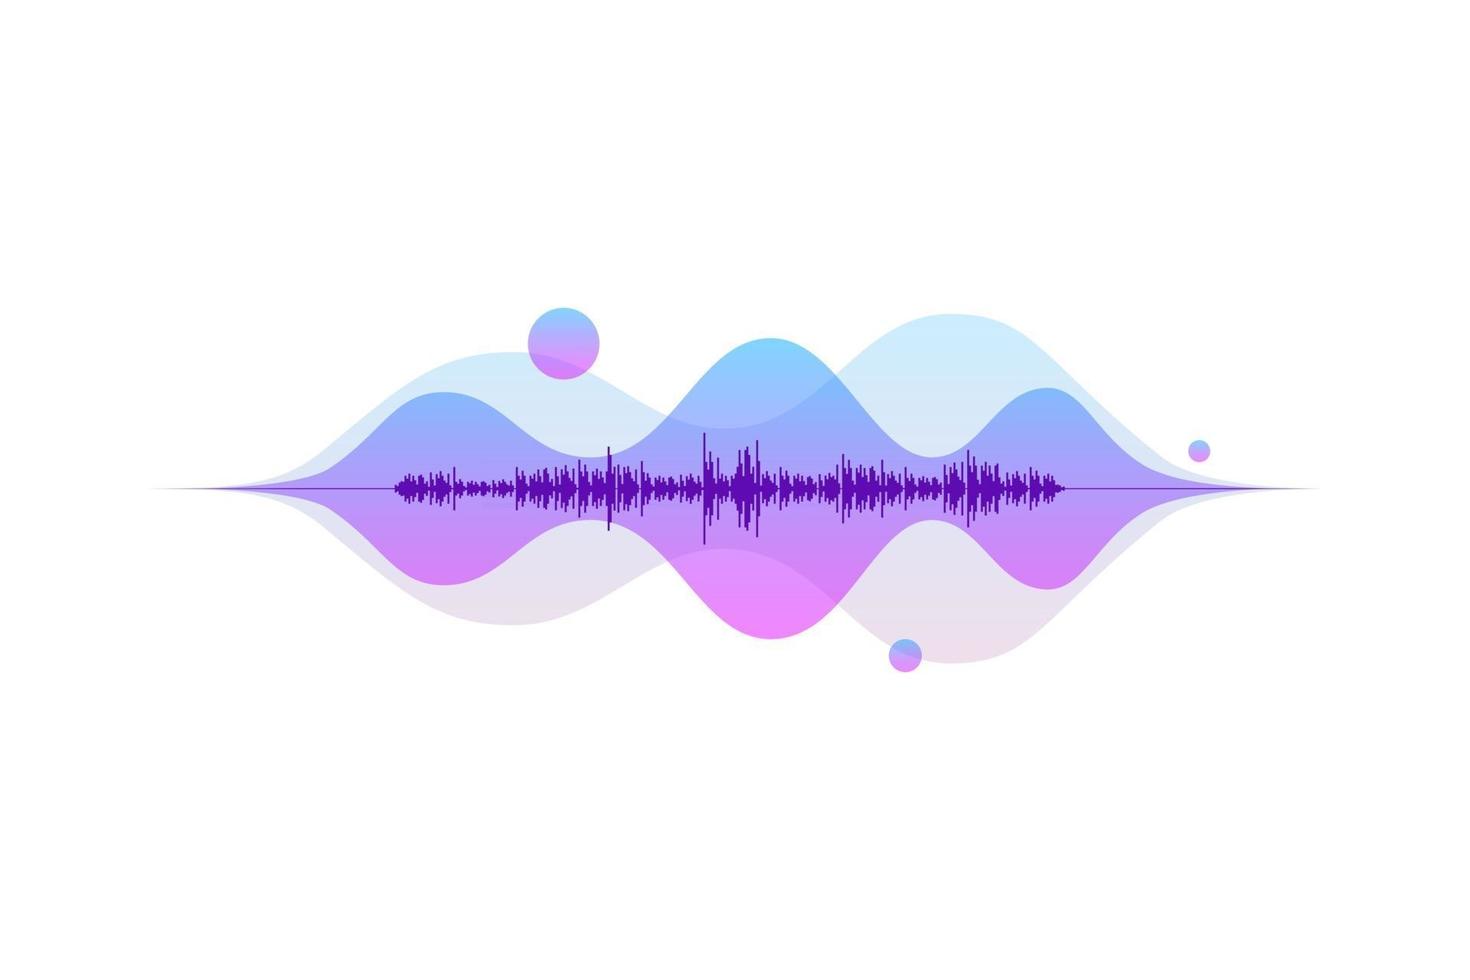 ljudvåg abstrakt digital equalizer. rörelse ljusflöde vektor musikelement ljudkoncept